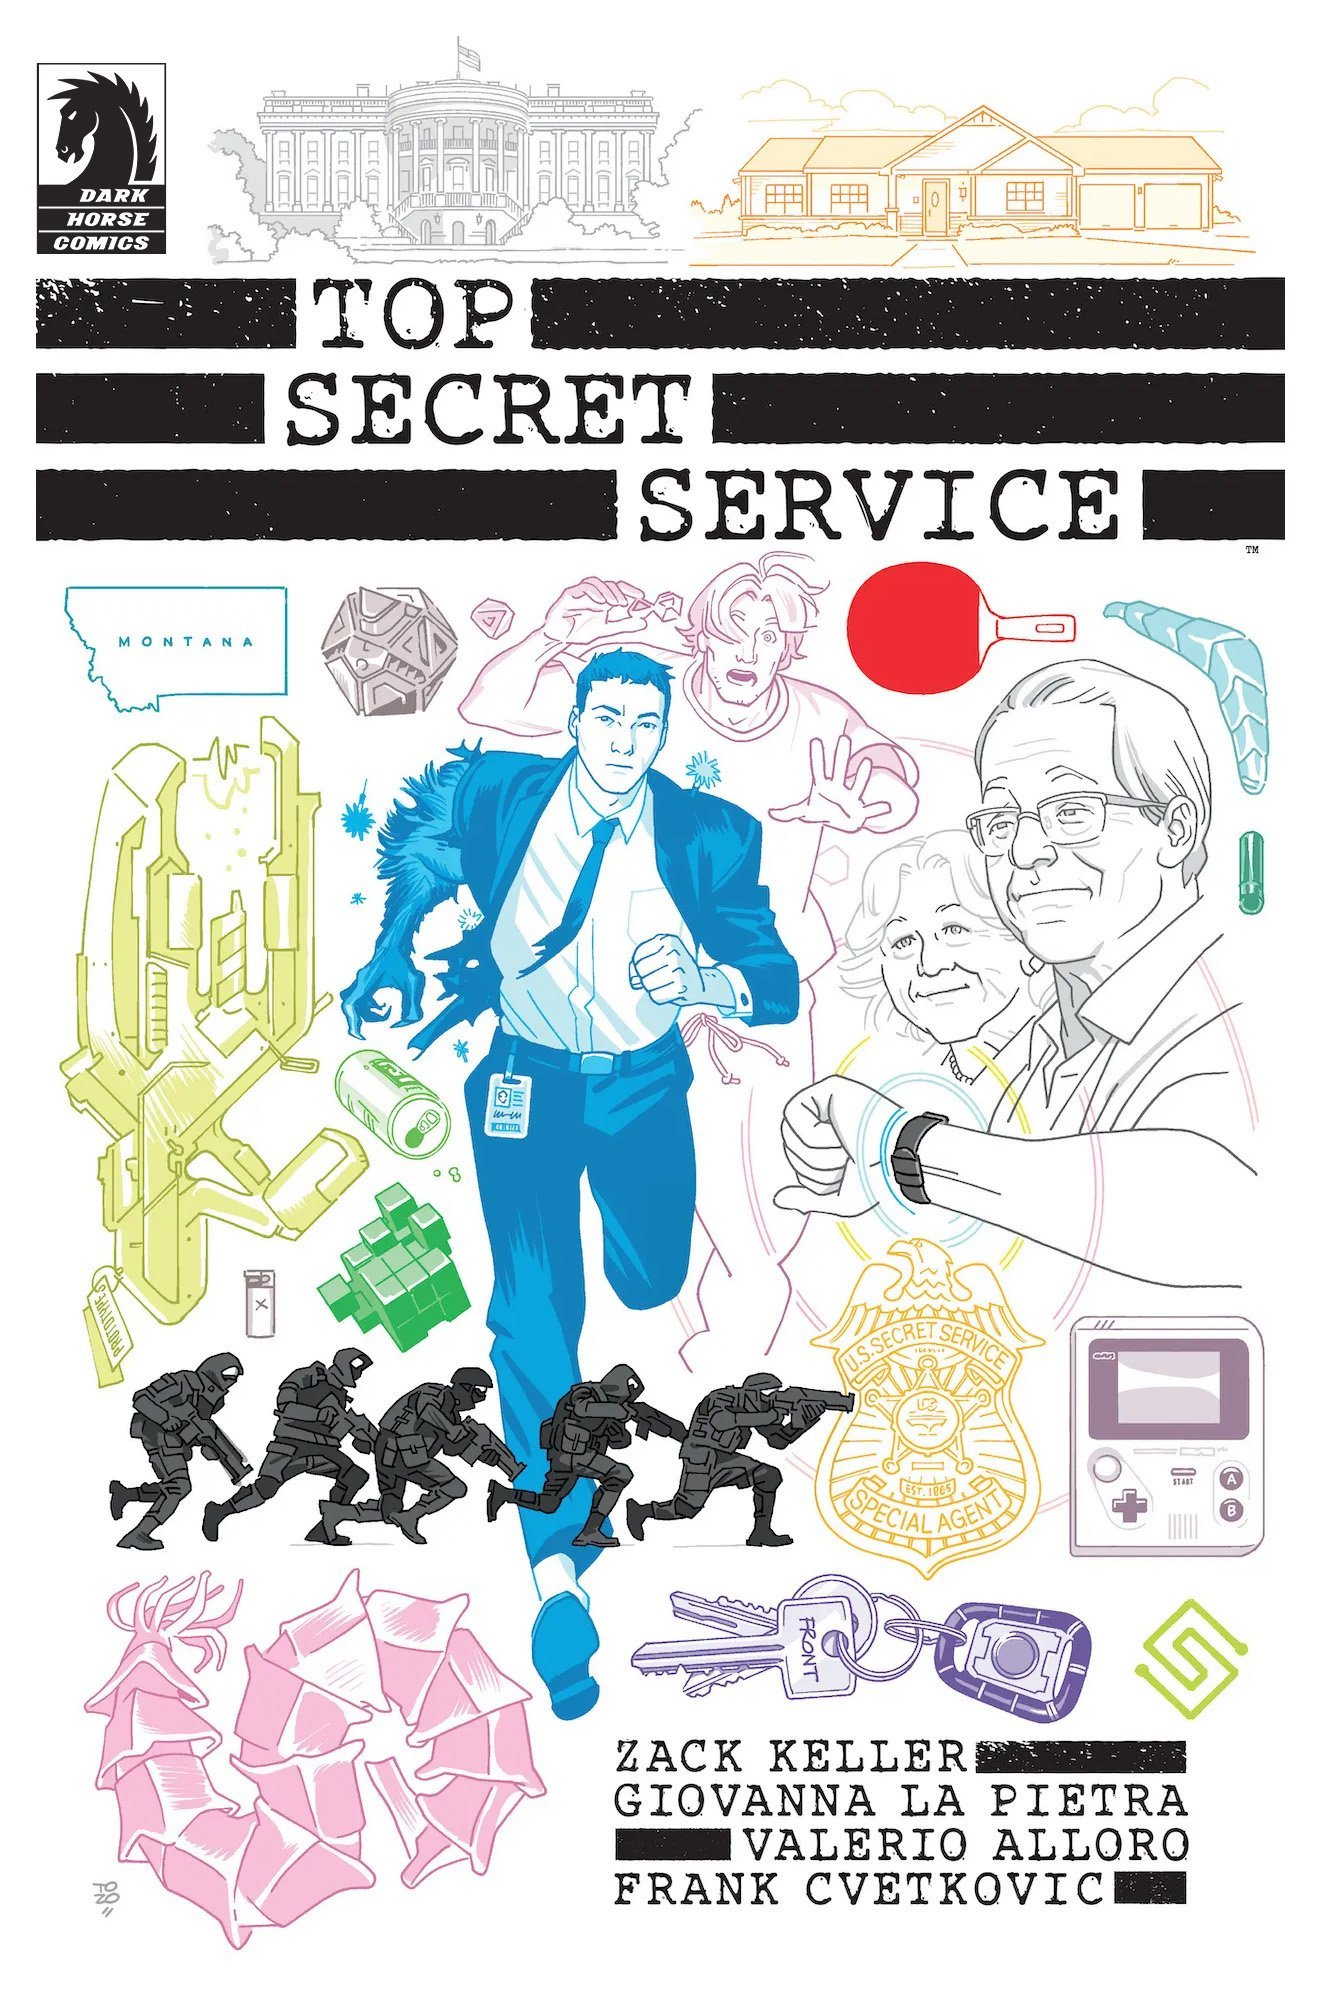 Top-Secret-Service-fix.jpg